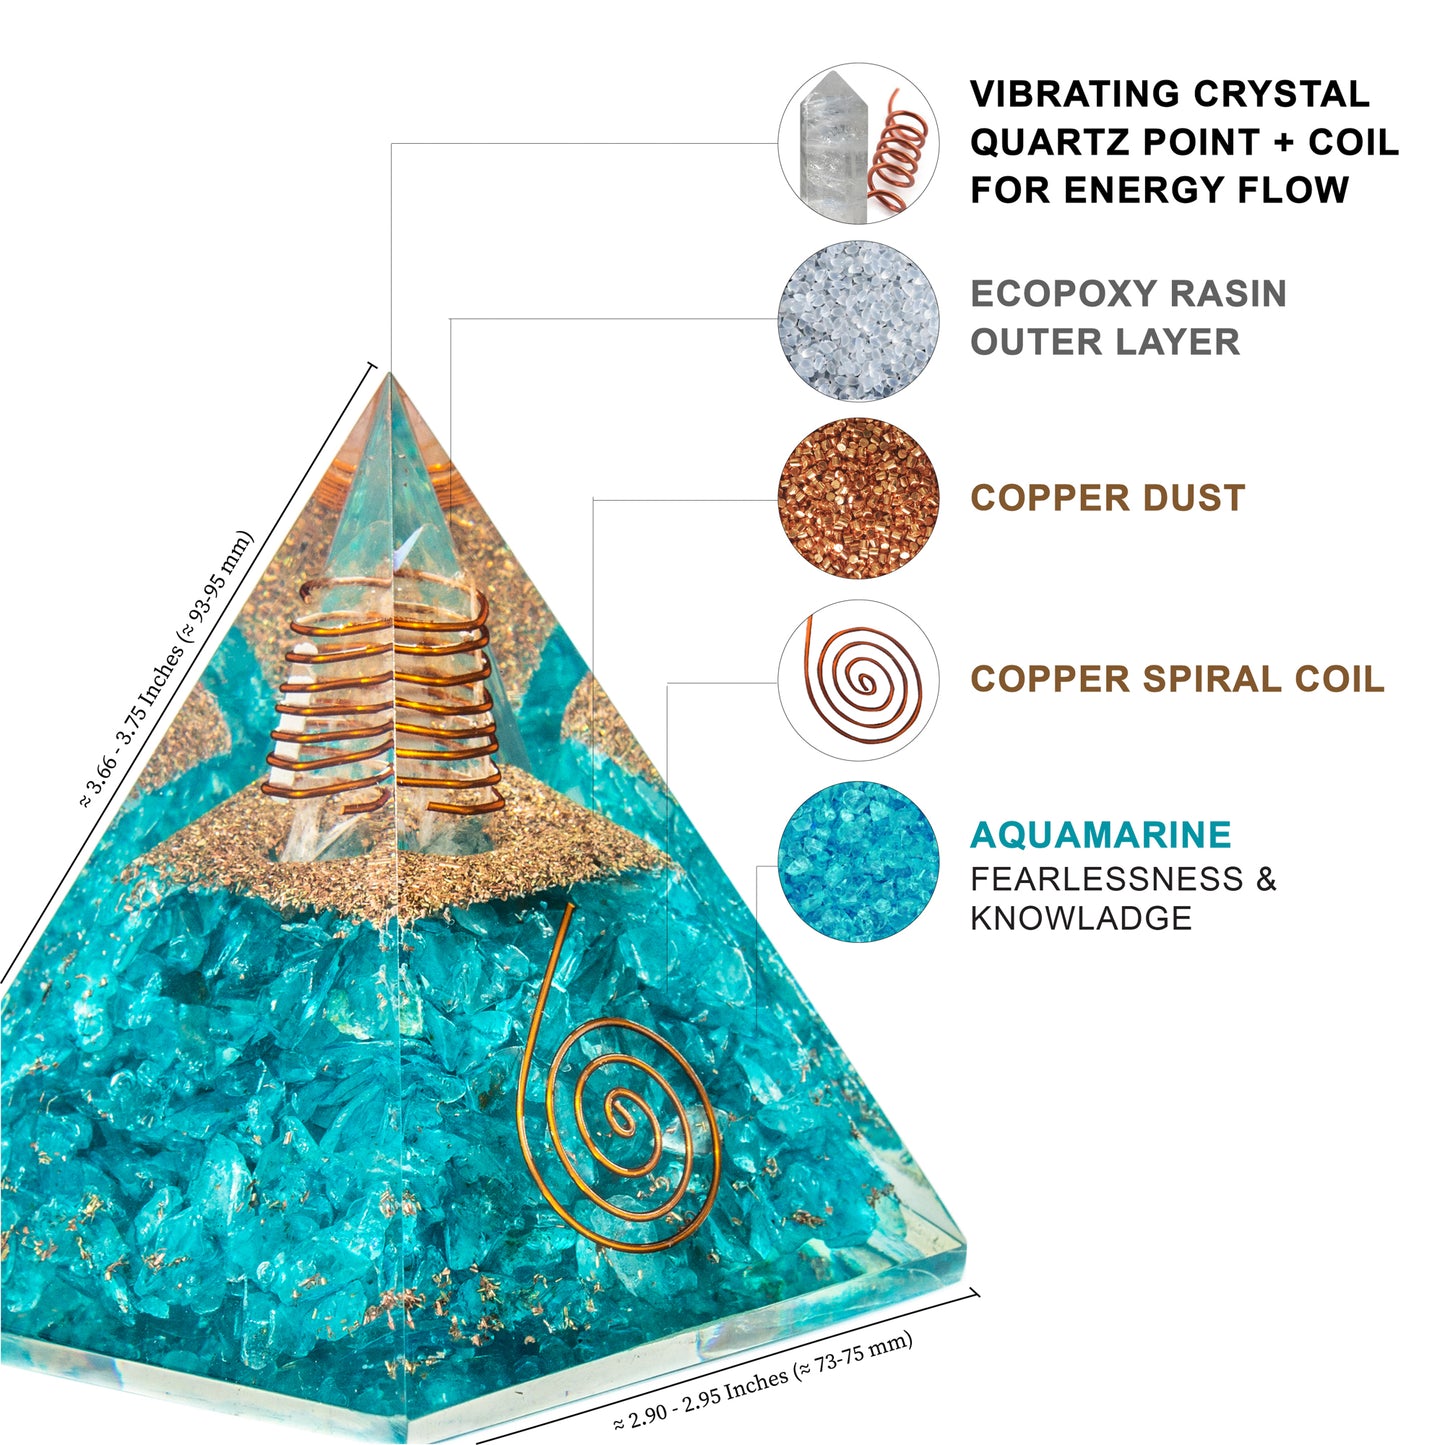 Aquamarine Orgone Pyramid for Joy & Happiness